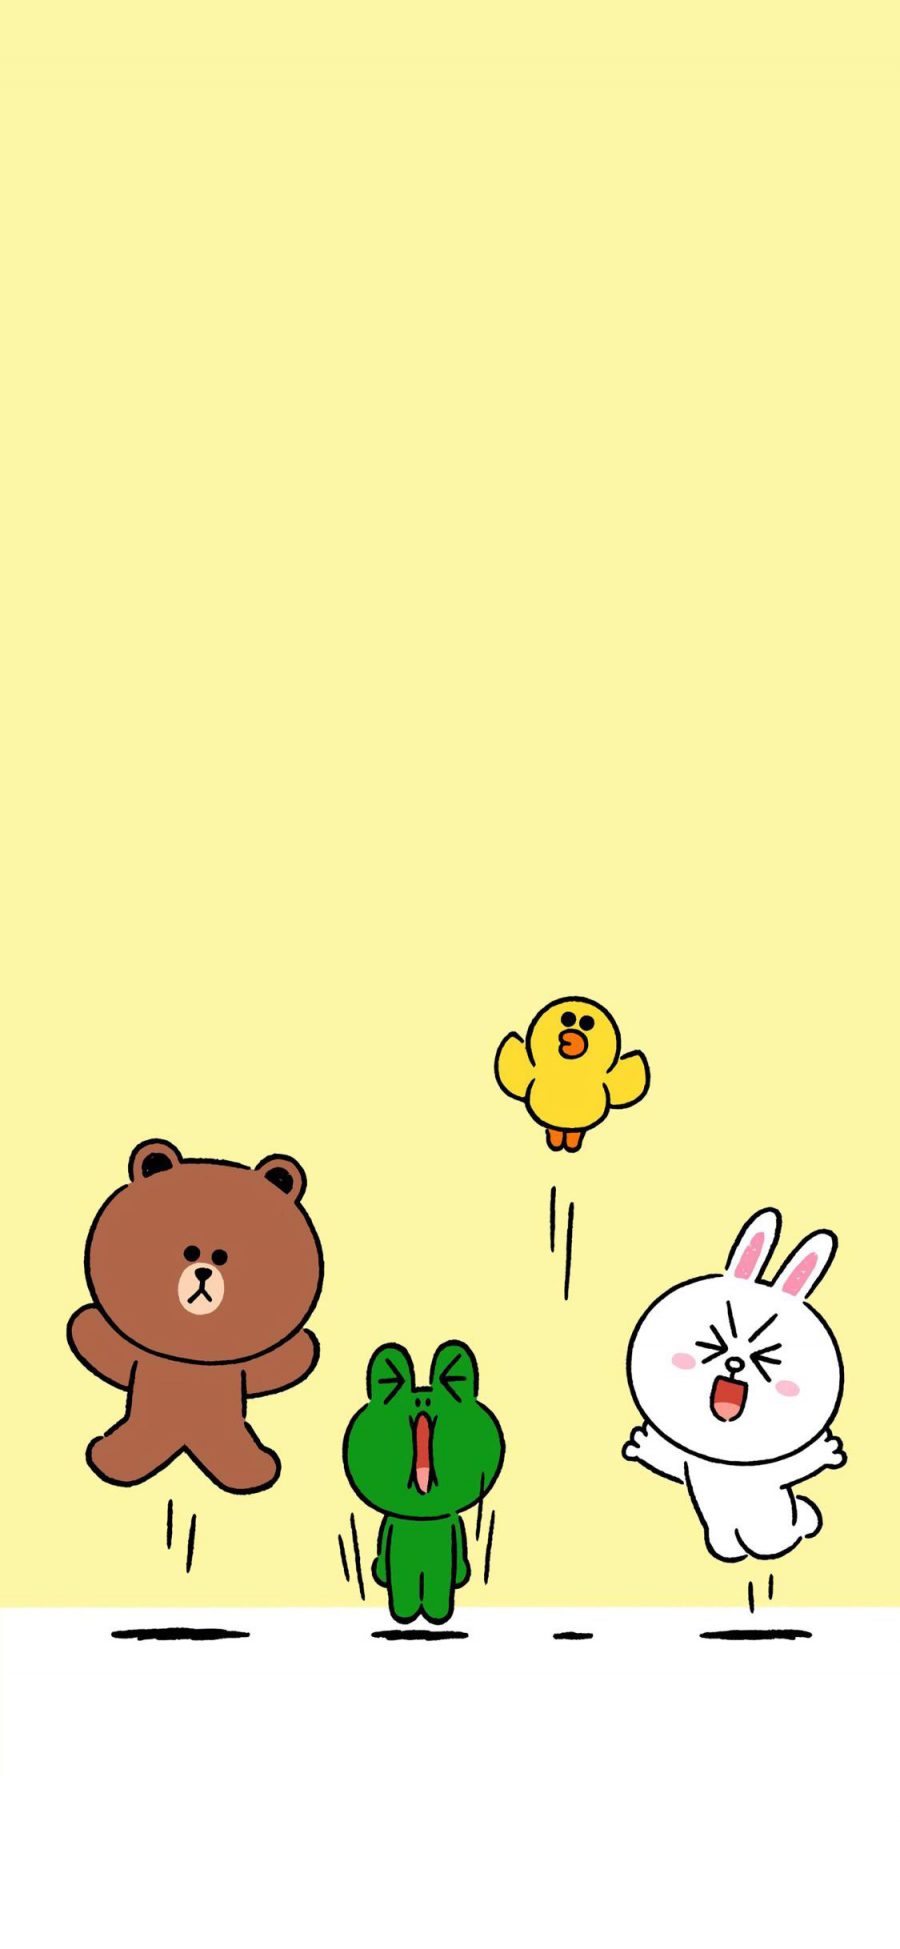 [2436×1125]linefriends 布朗熊 可妮兔 萨莉鸡 青蛙 黄色 苹果手机动漫壁纸图片